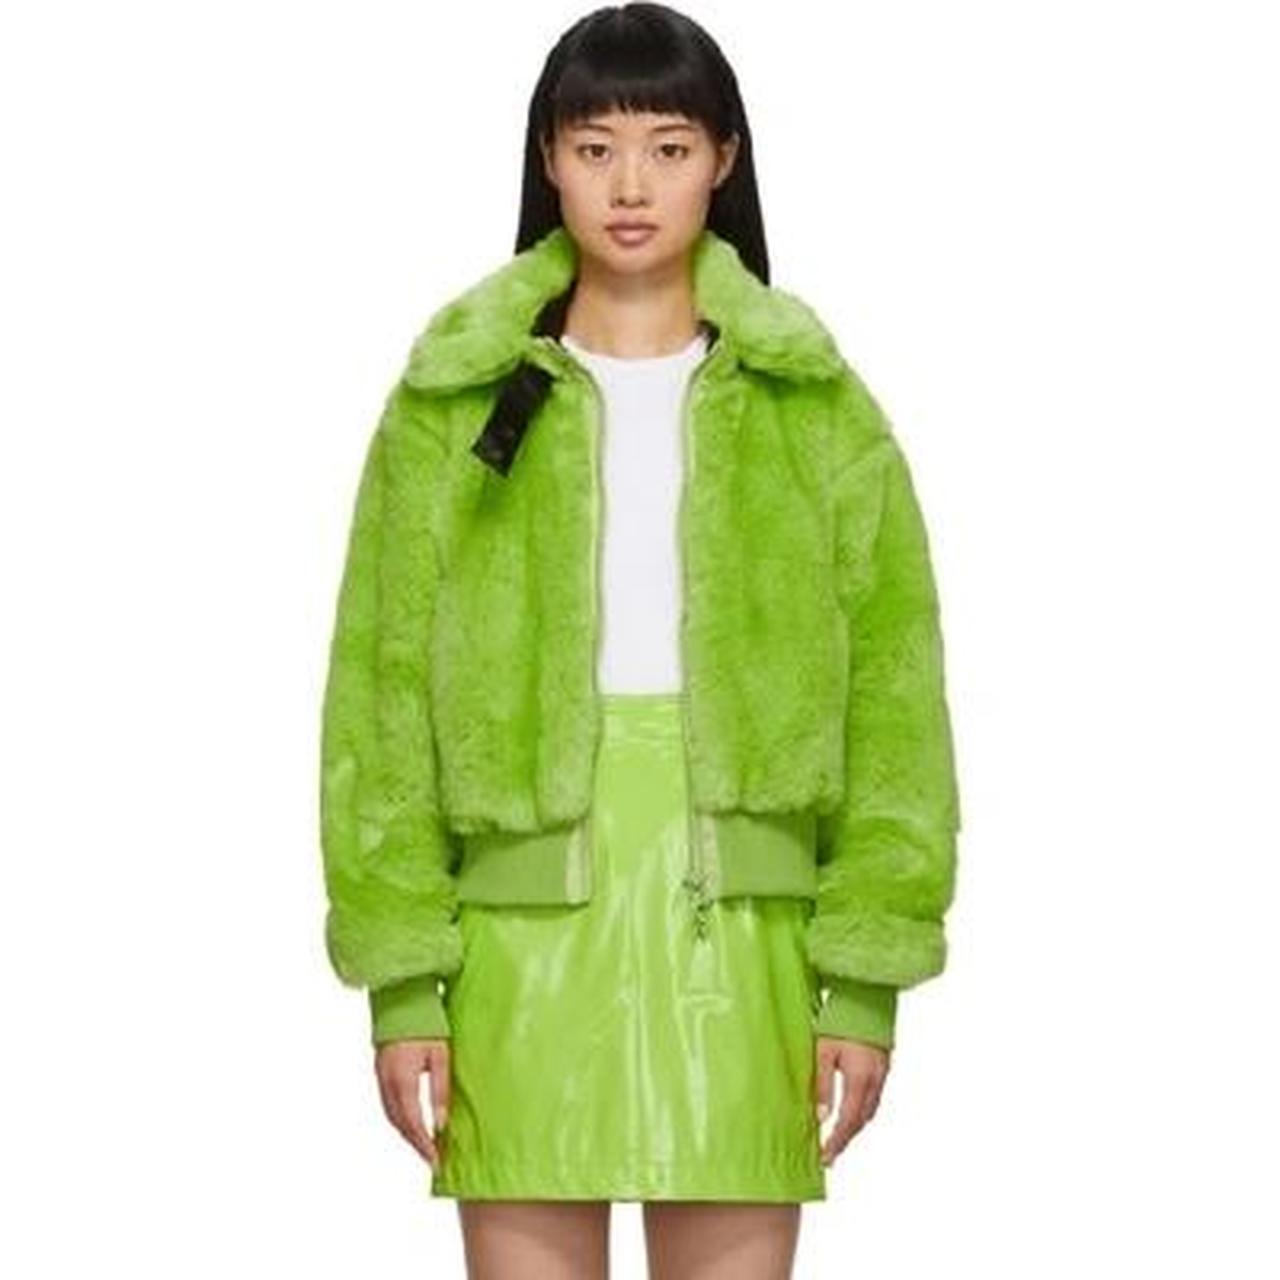 Kirin by Peggy Gou green smiley face faux fur jacket...